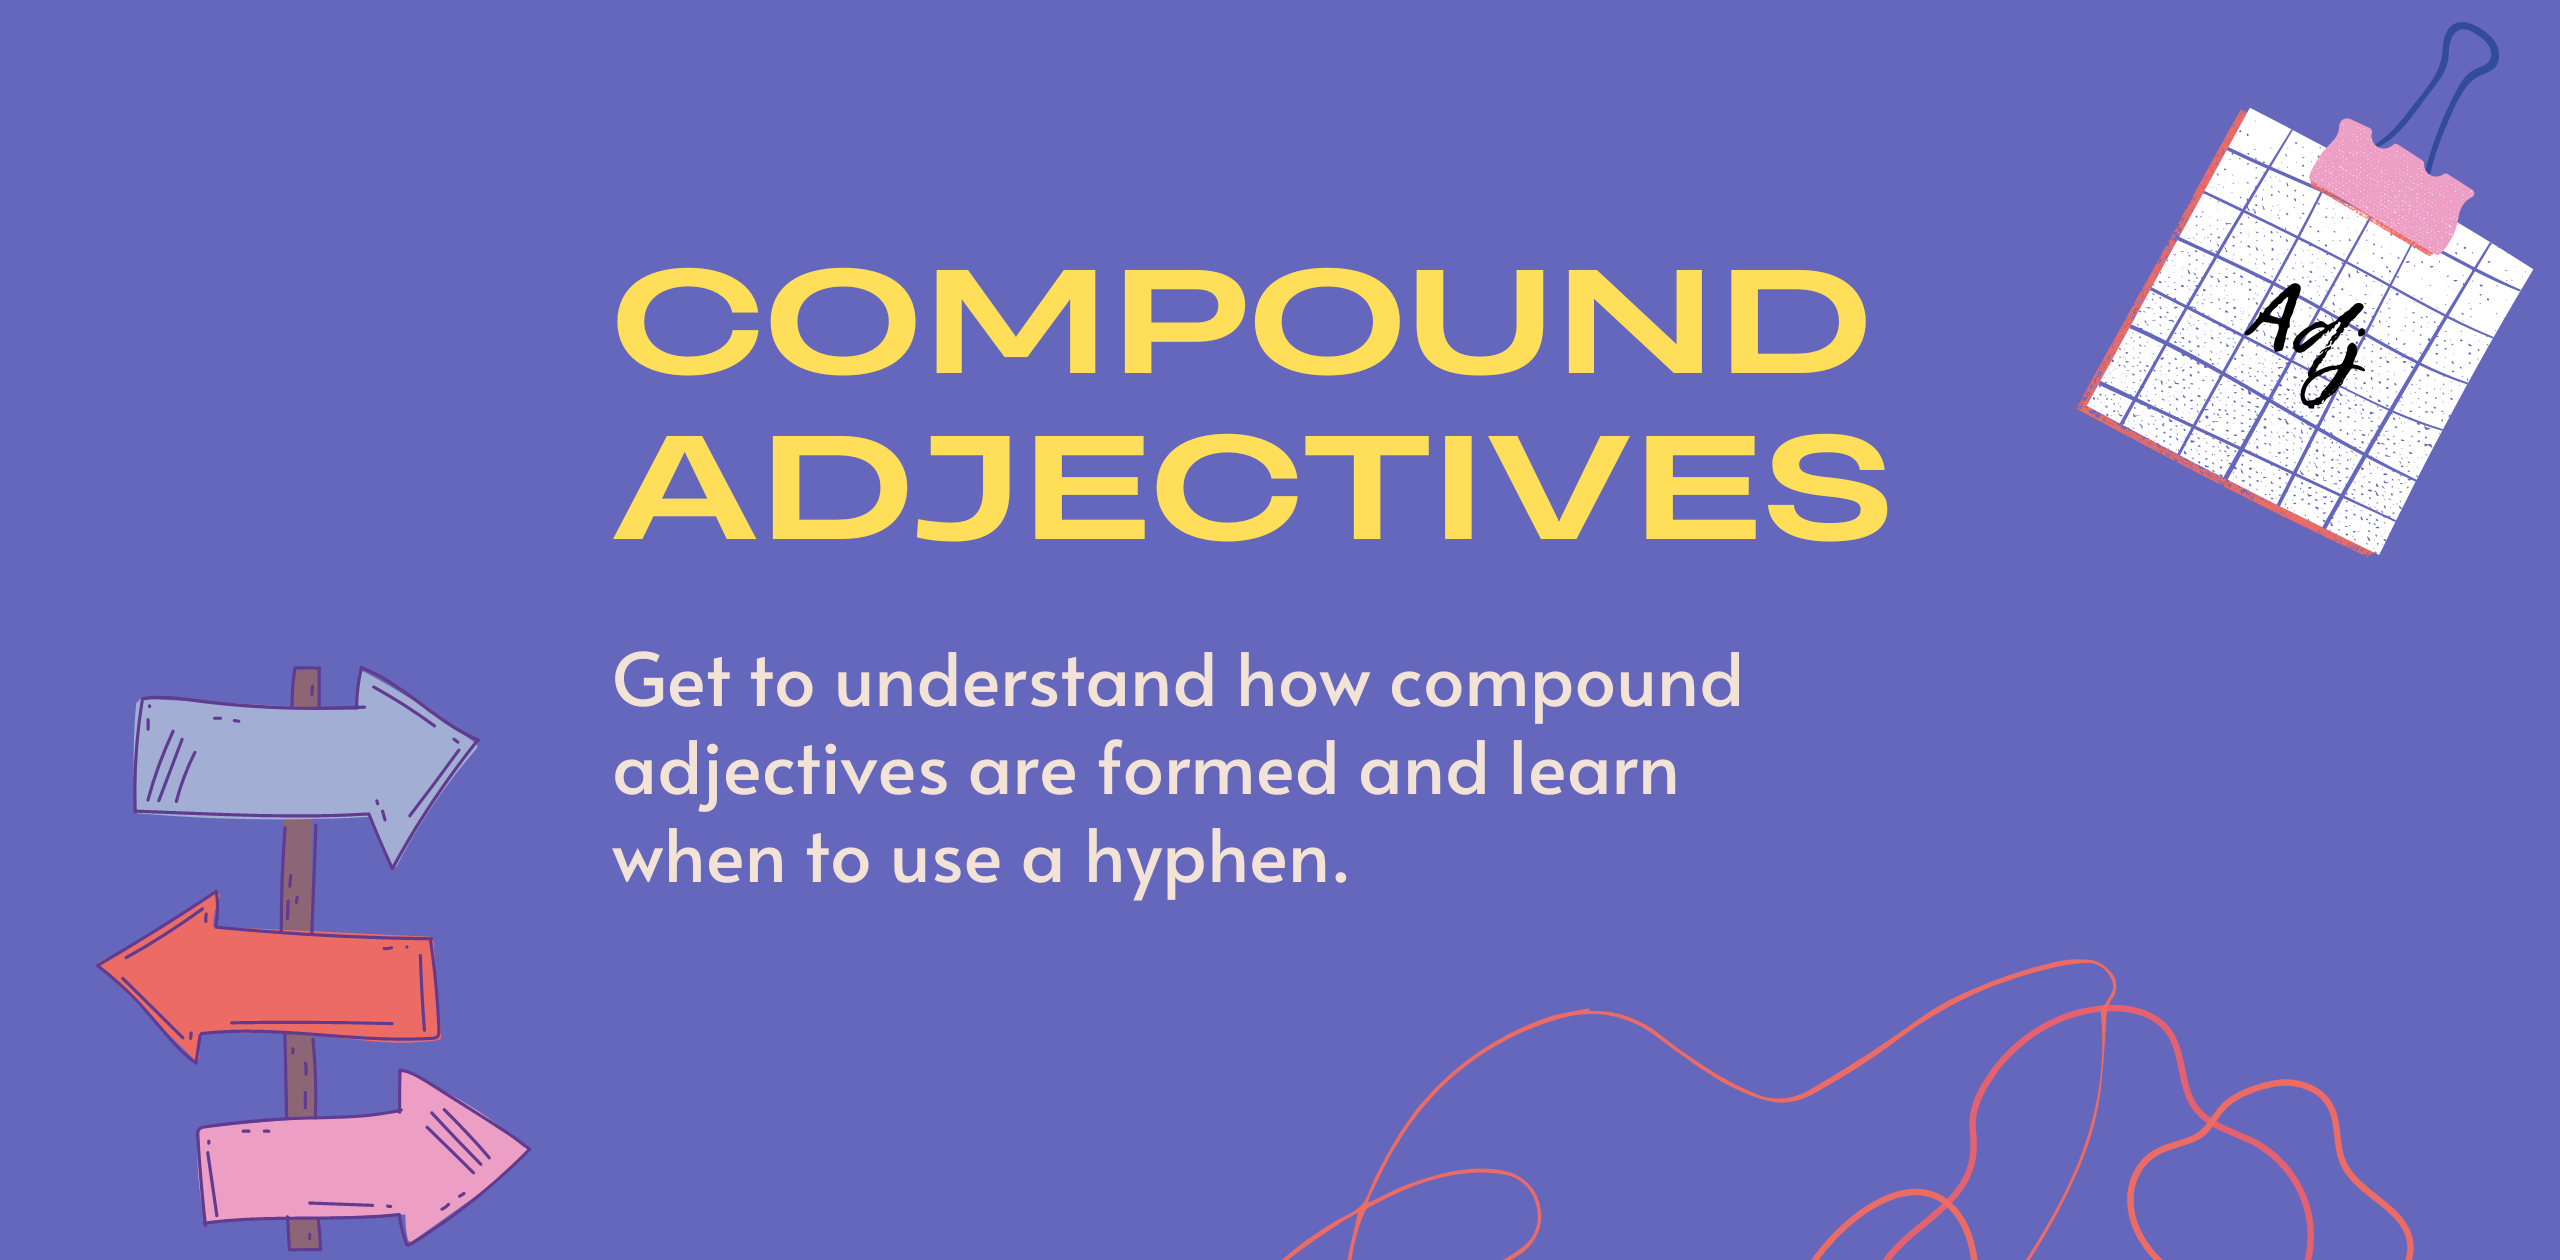 Compound adjectives